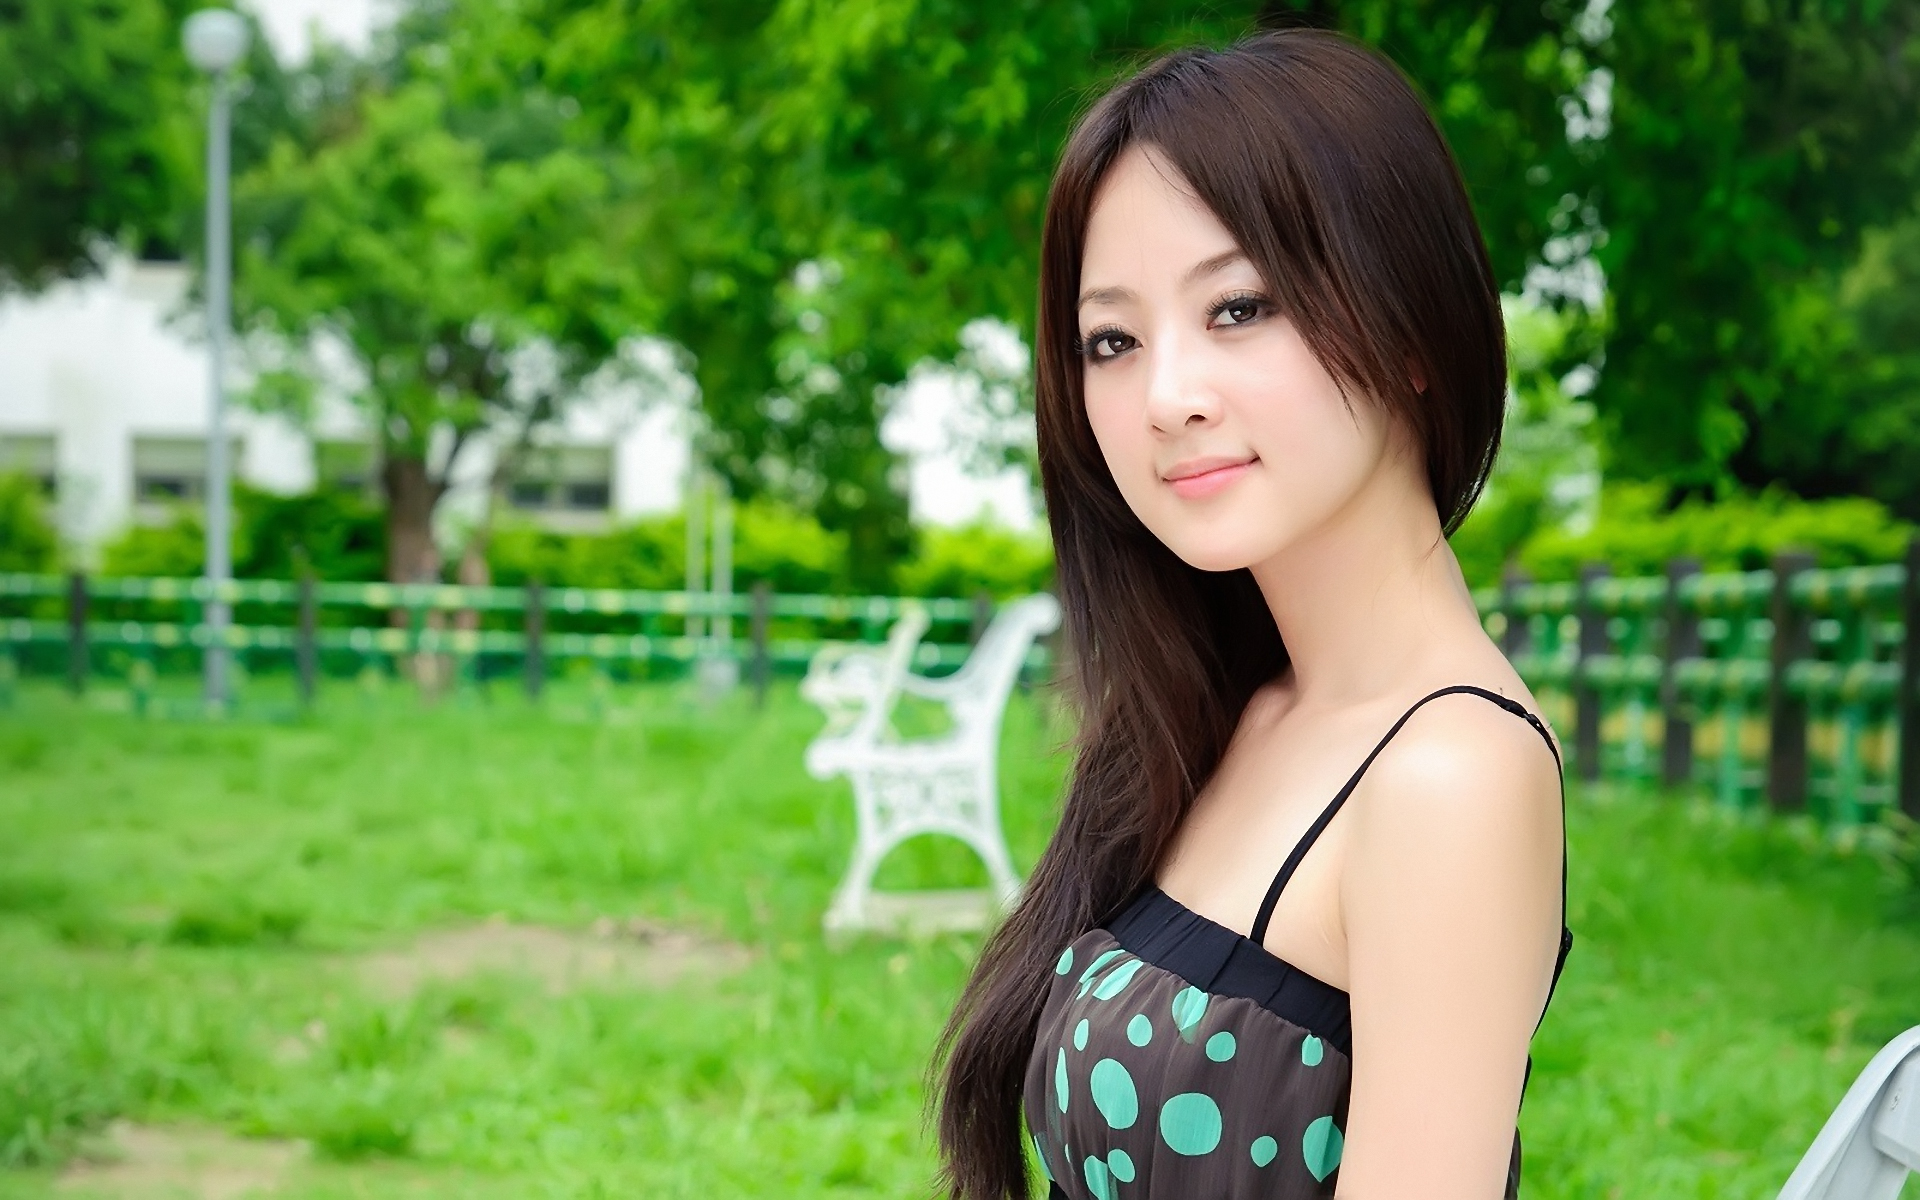 Asian girls pretty 1